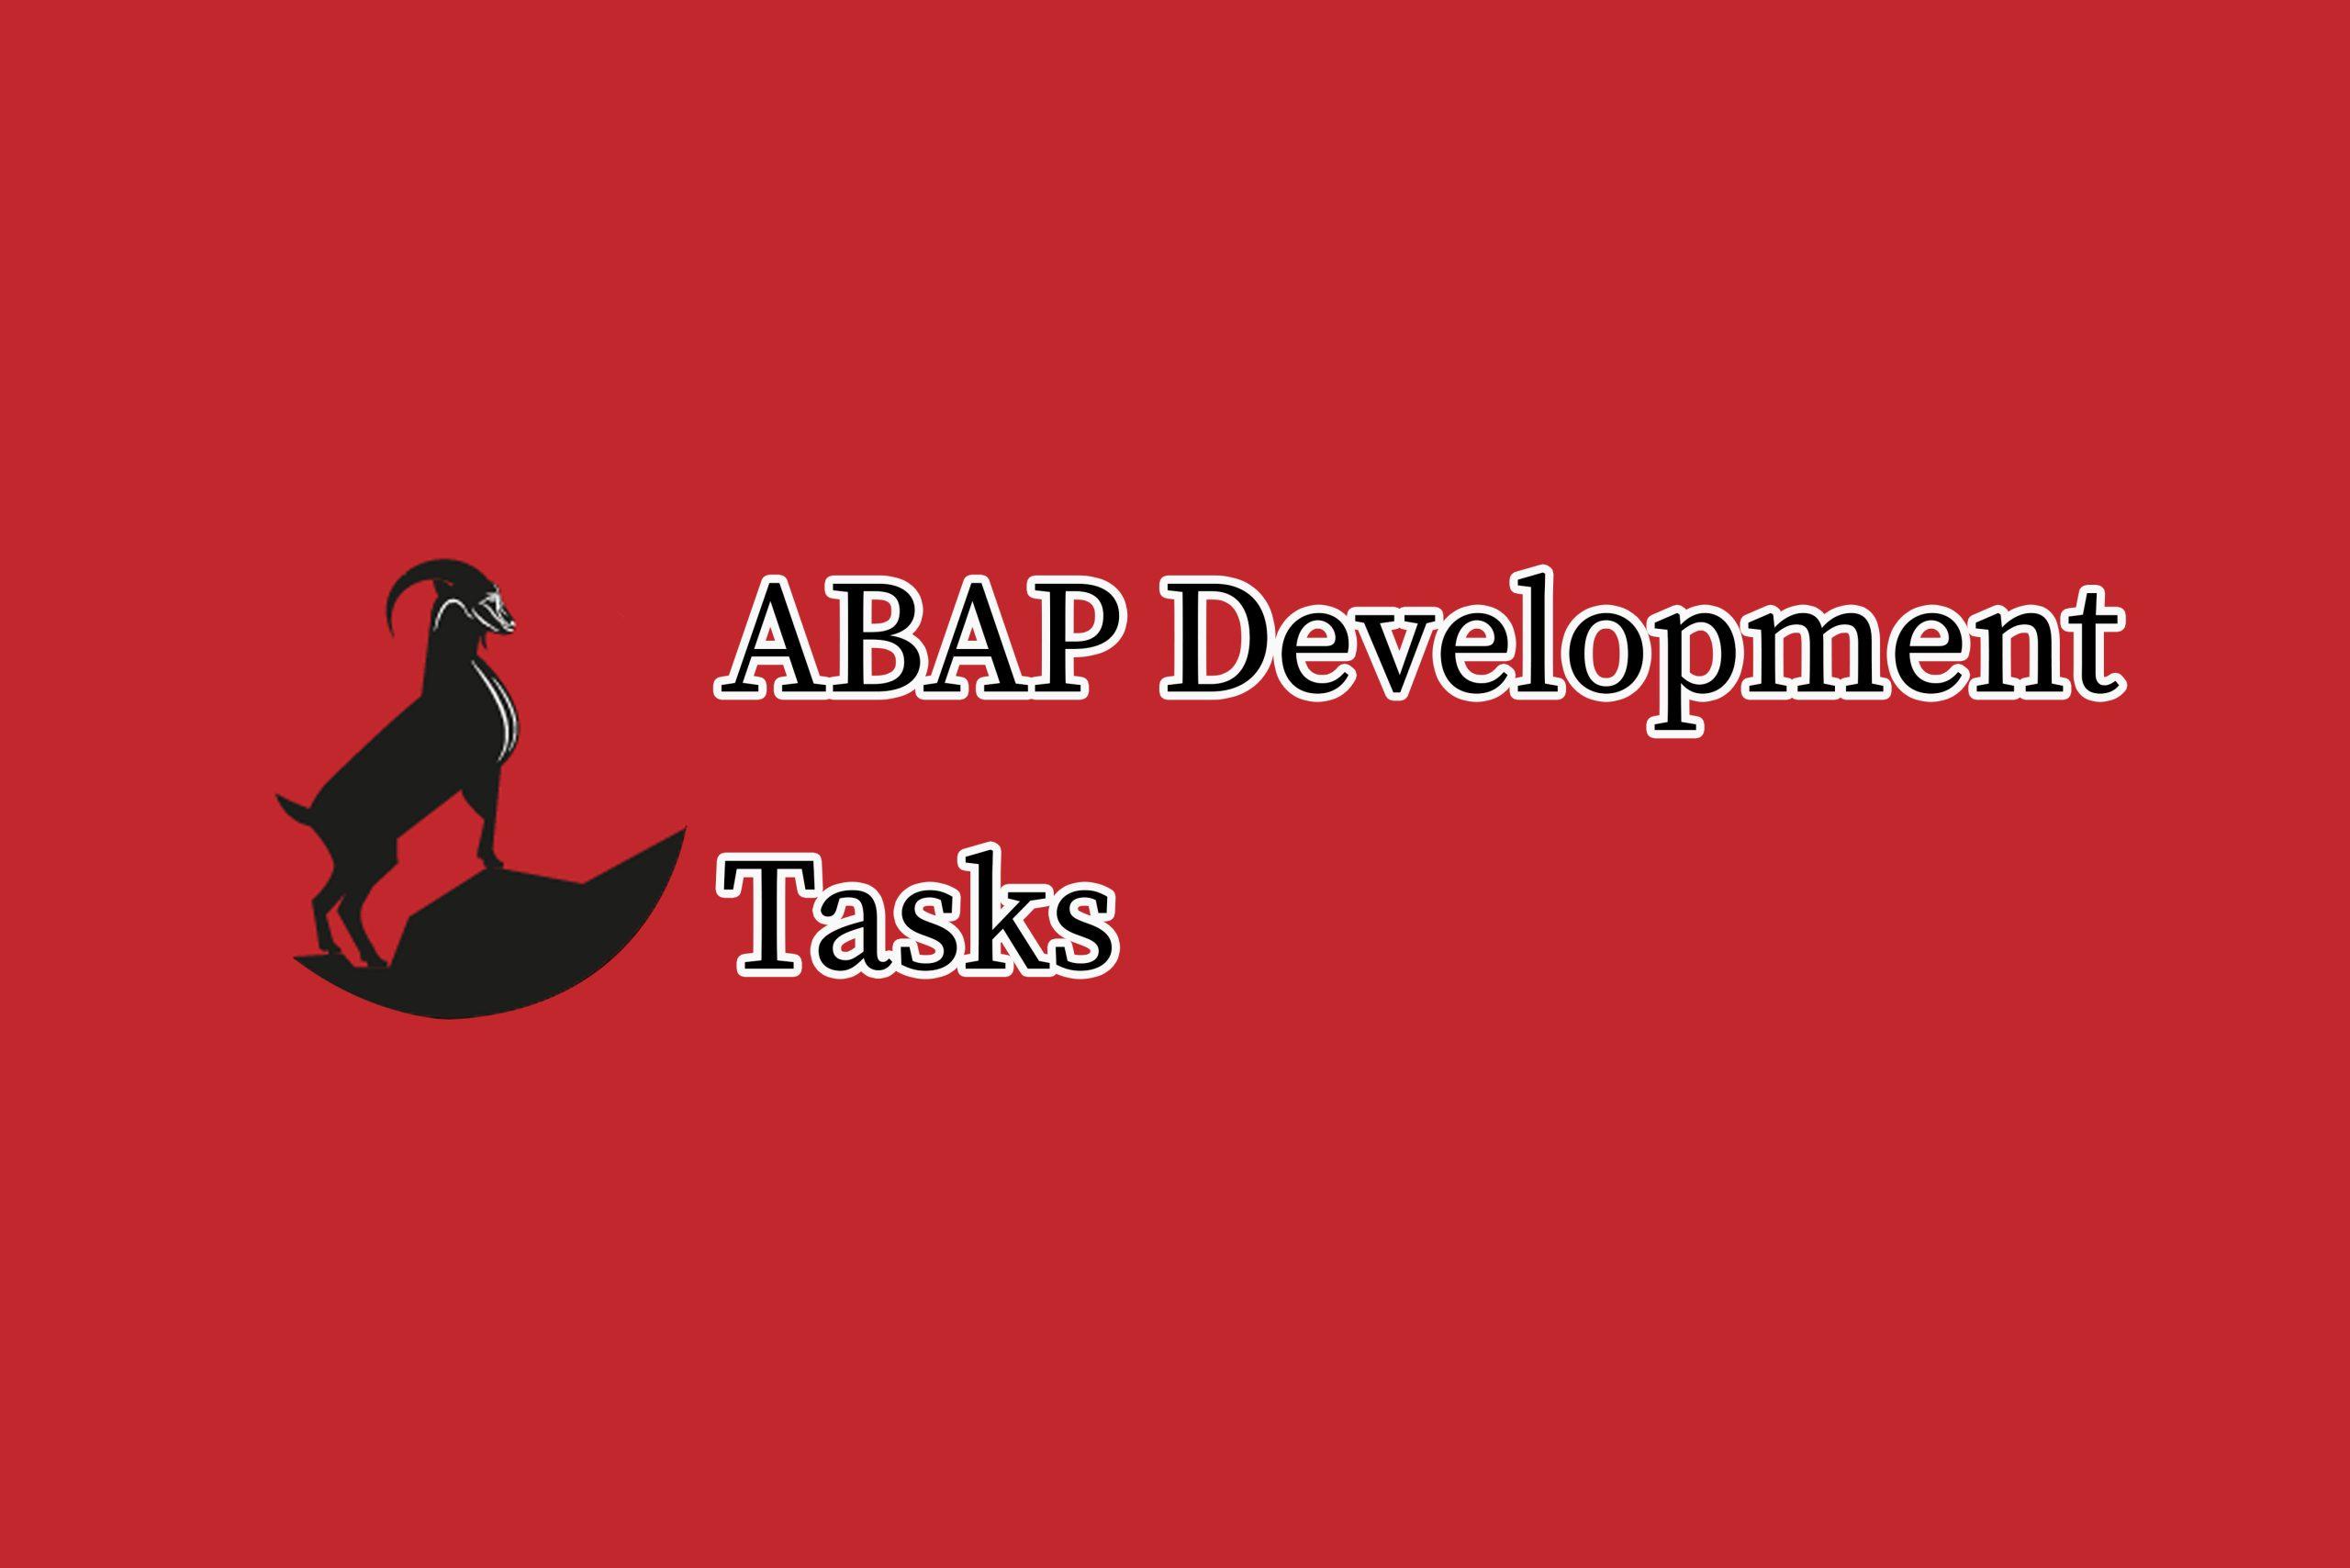 ABAP Development Tasks